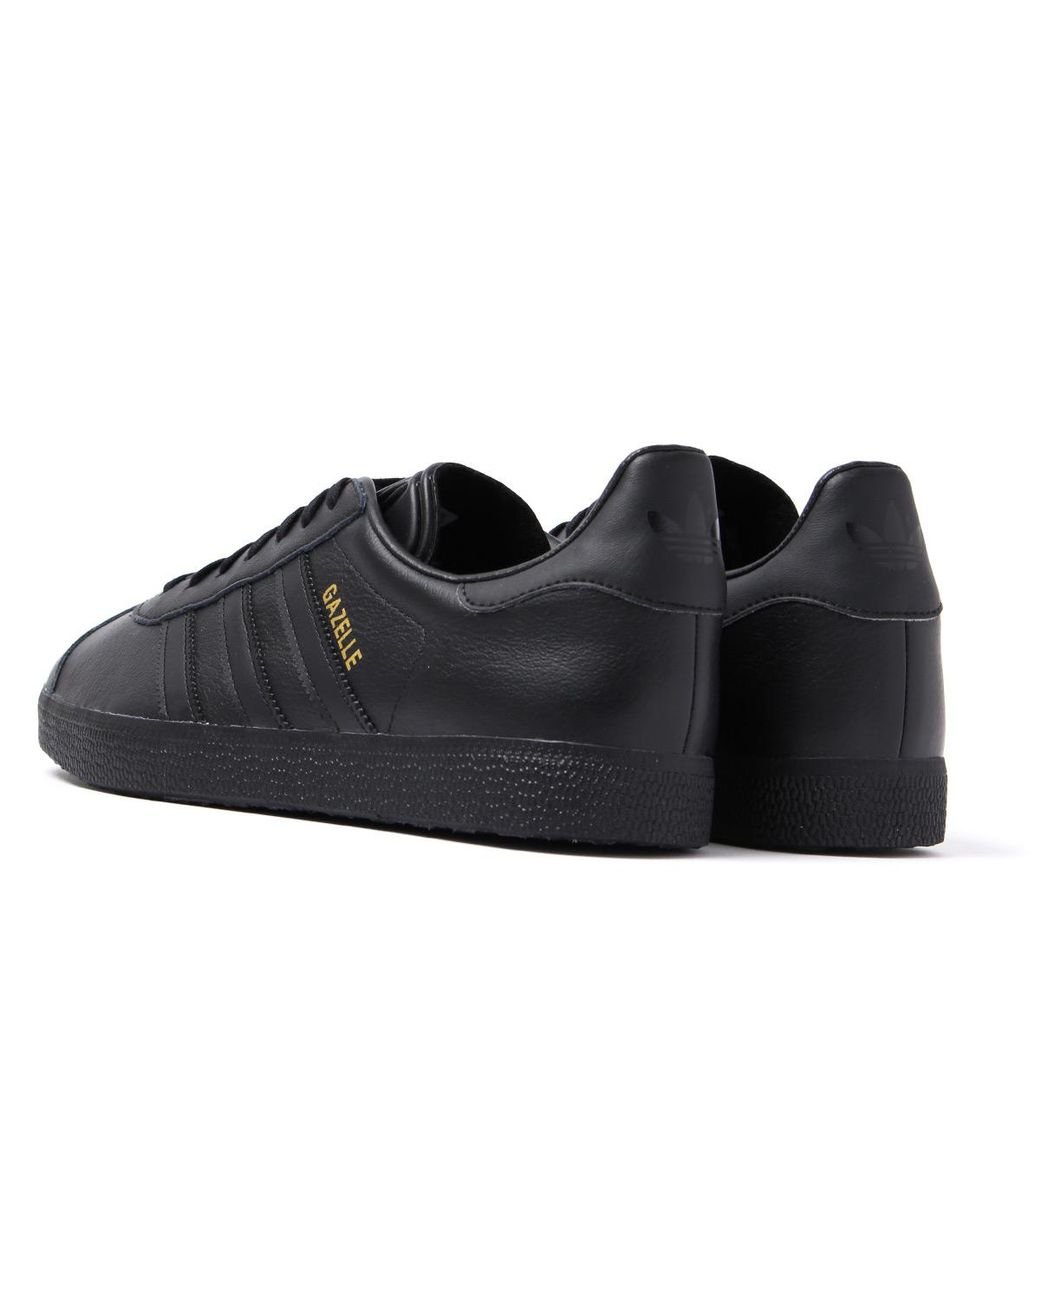 adidas Originals Gazelle Black Leather Trainers for Men | Lyst